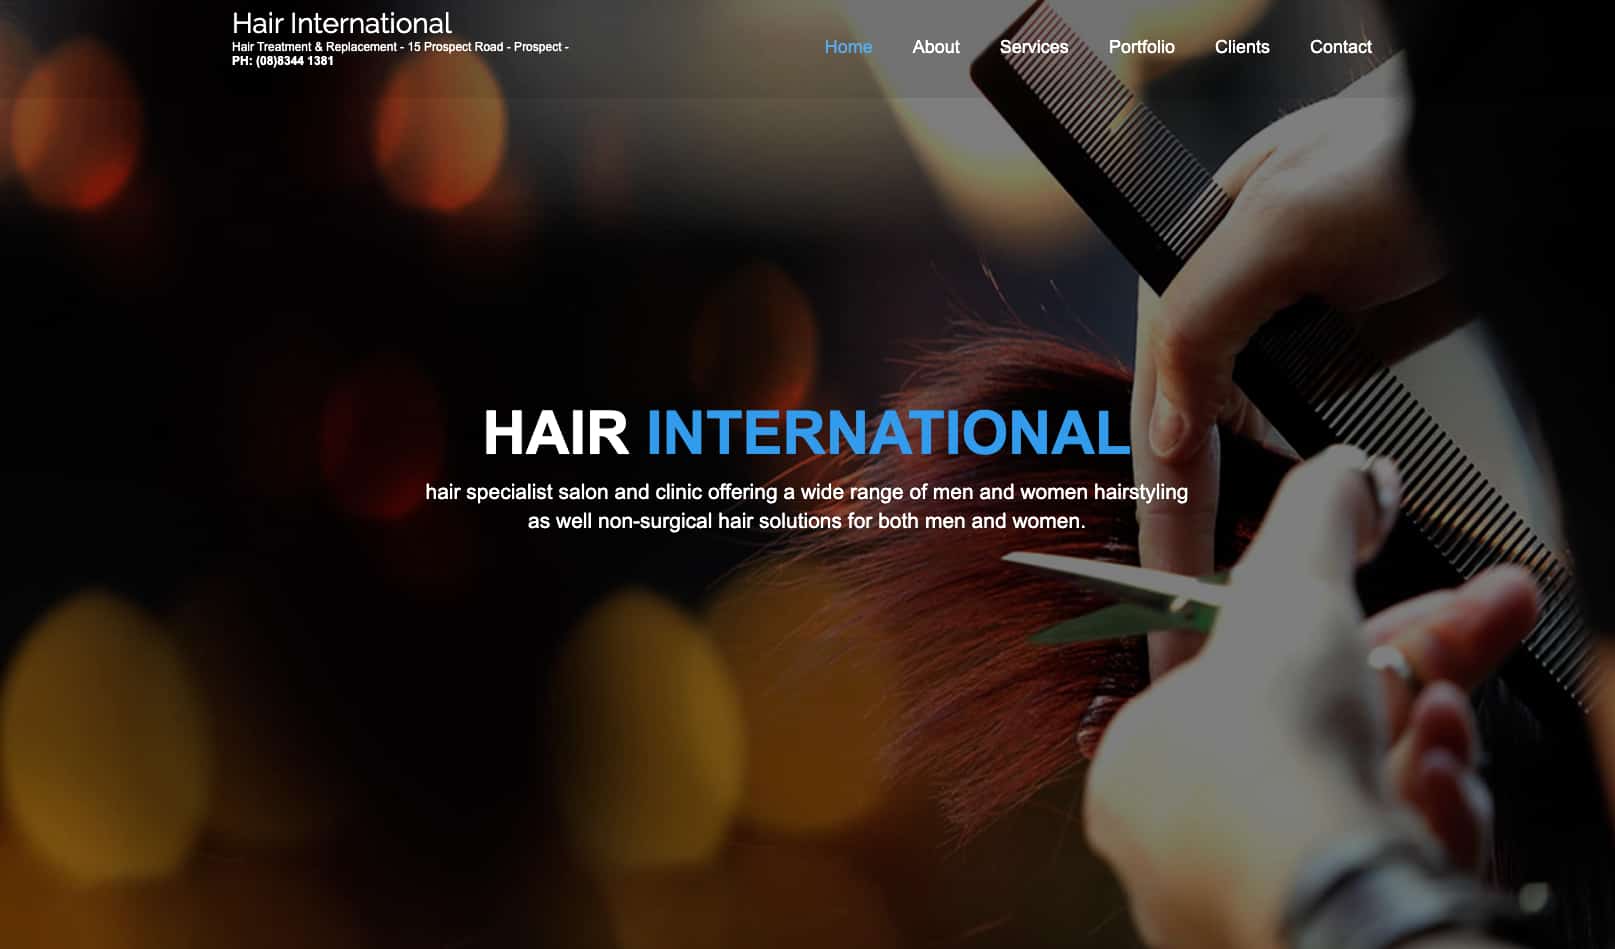 Hair International